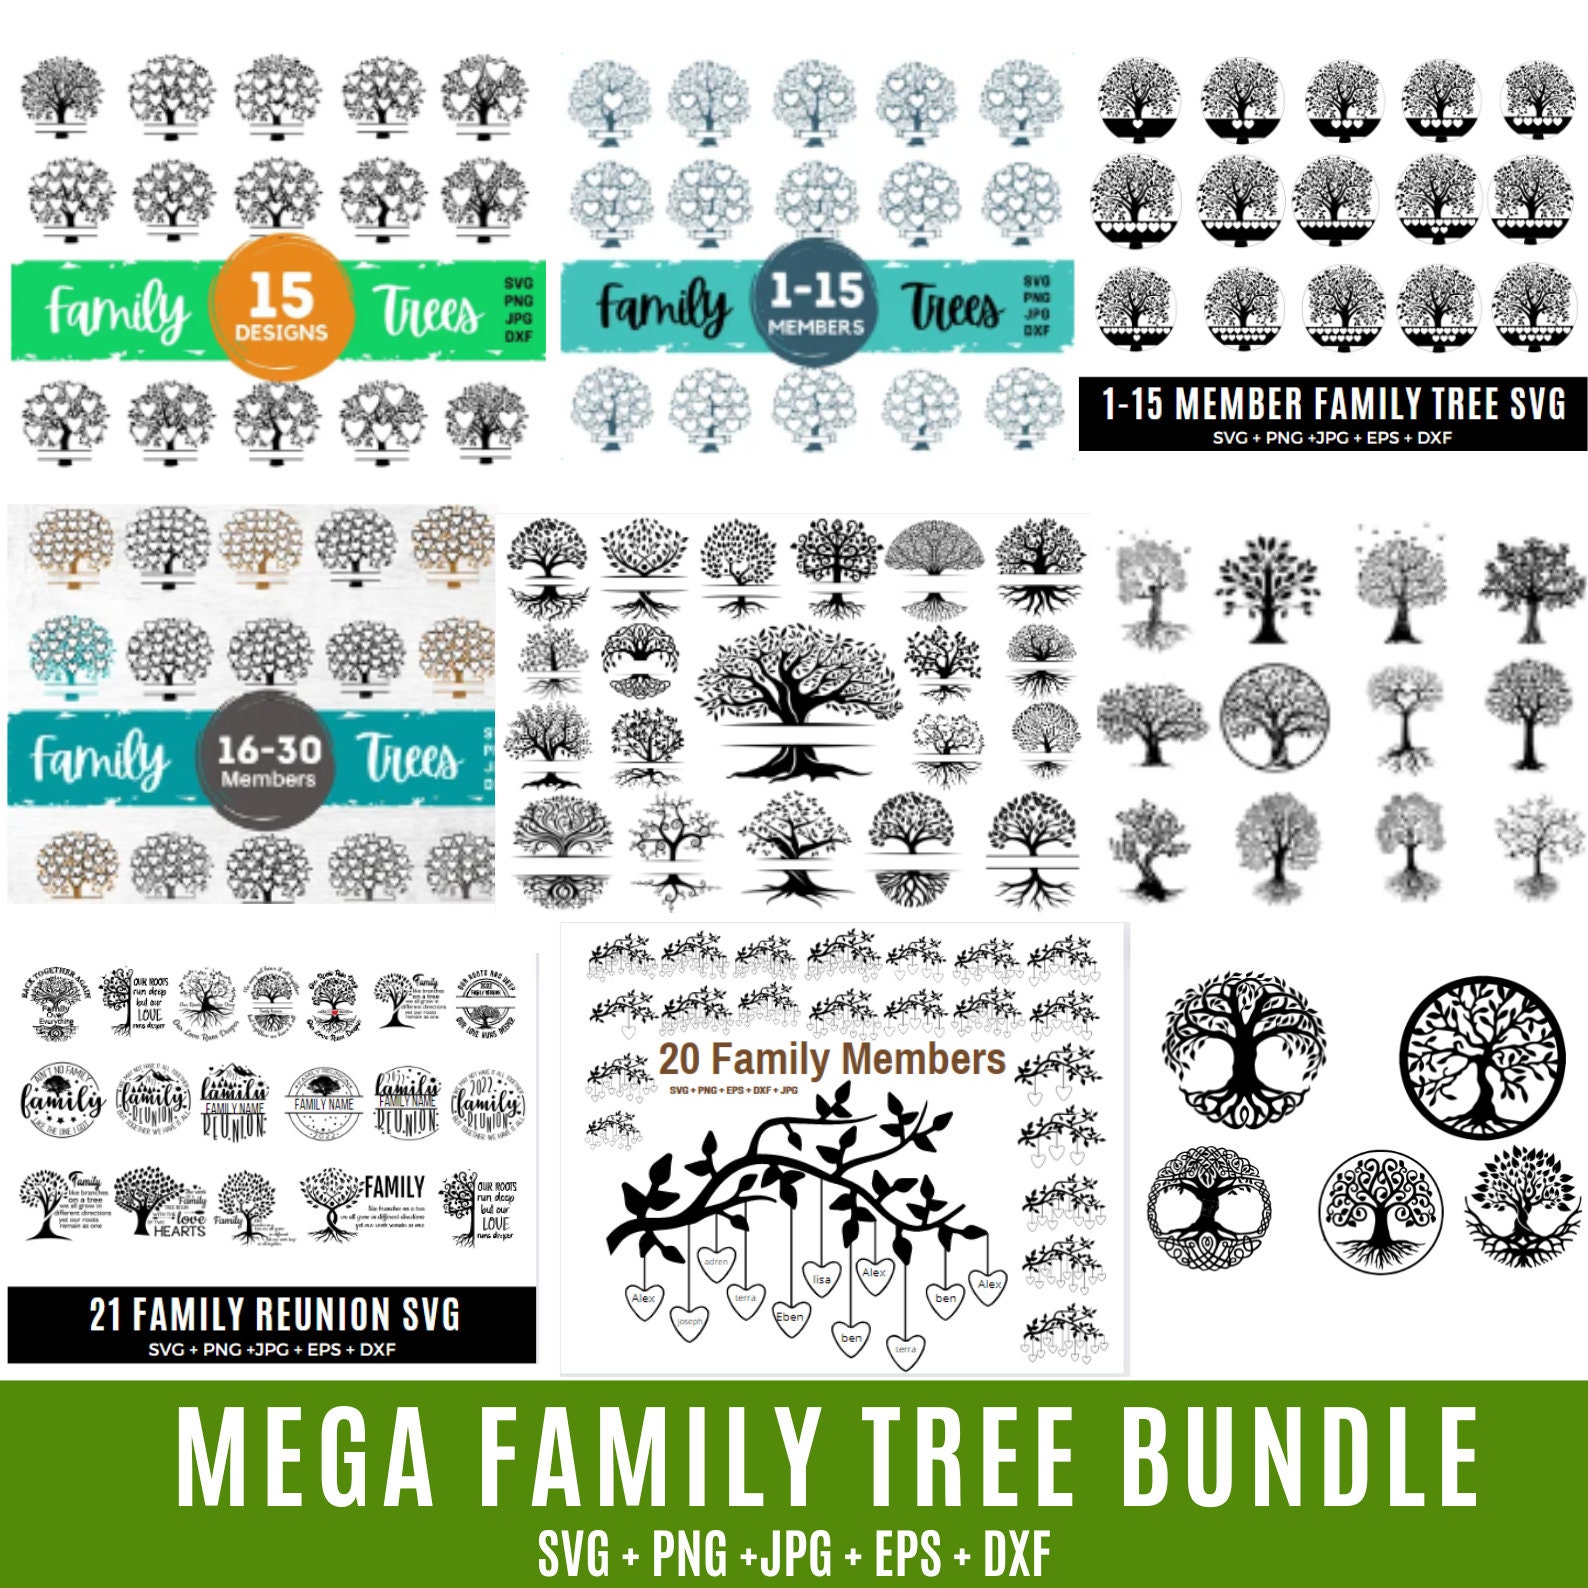 Family Tree Chart Digital Family Tree Template Print at Home Ancestry Chart  Genealogy Template Genealogy Sheet 6 Generation Pedigree Chart 